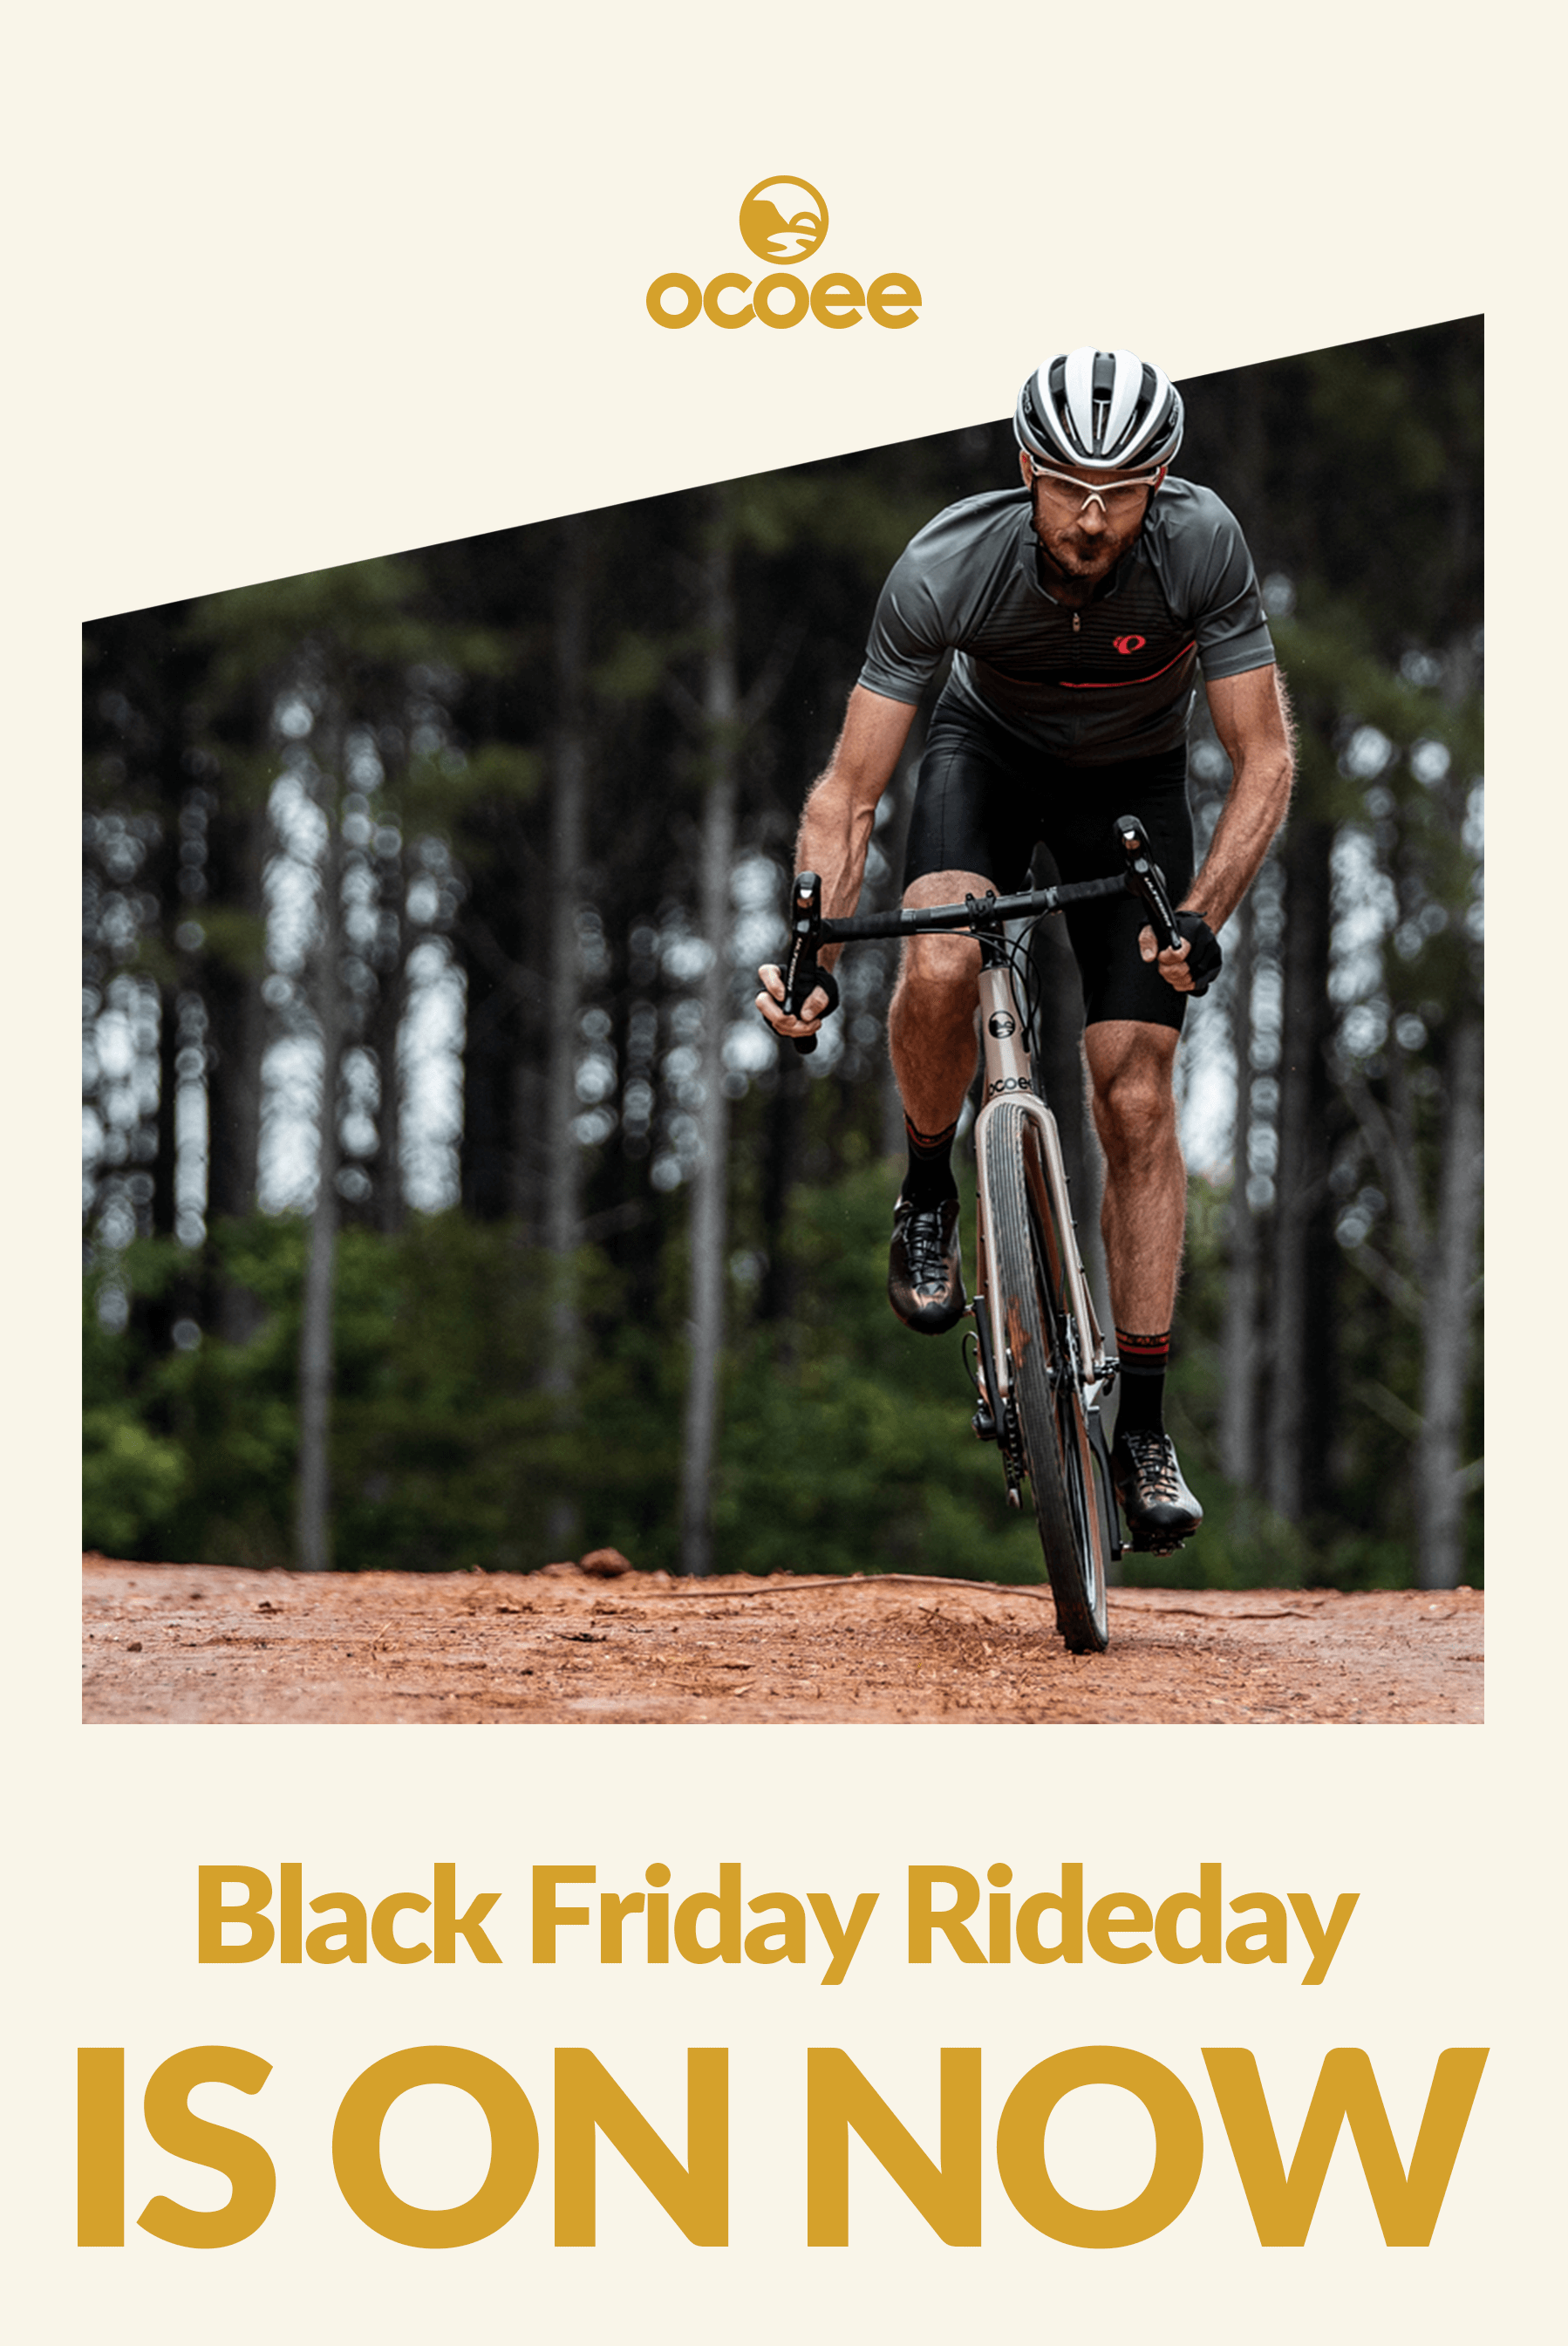 The Savings Start Now: Black Friday Rideday! Save up to $410 on a new Ocoee bike.